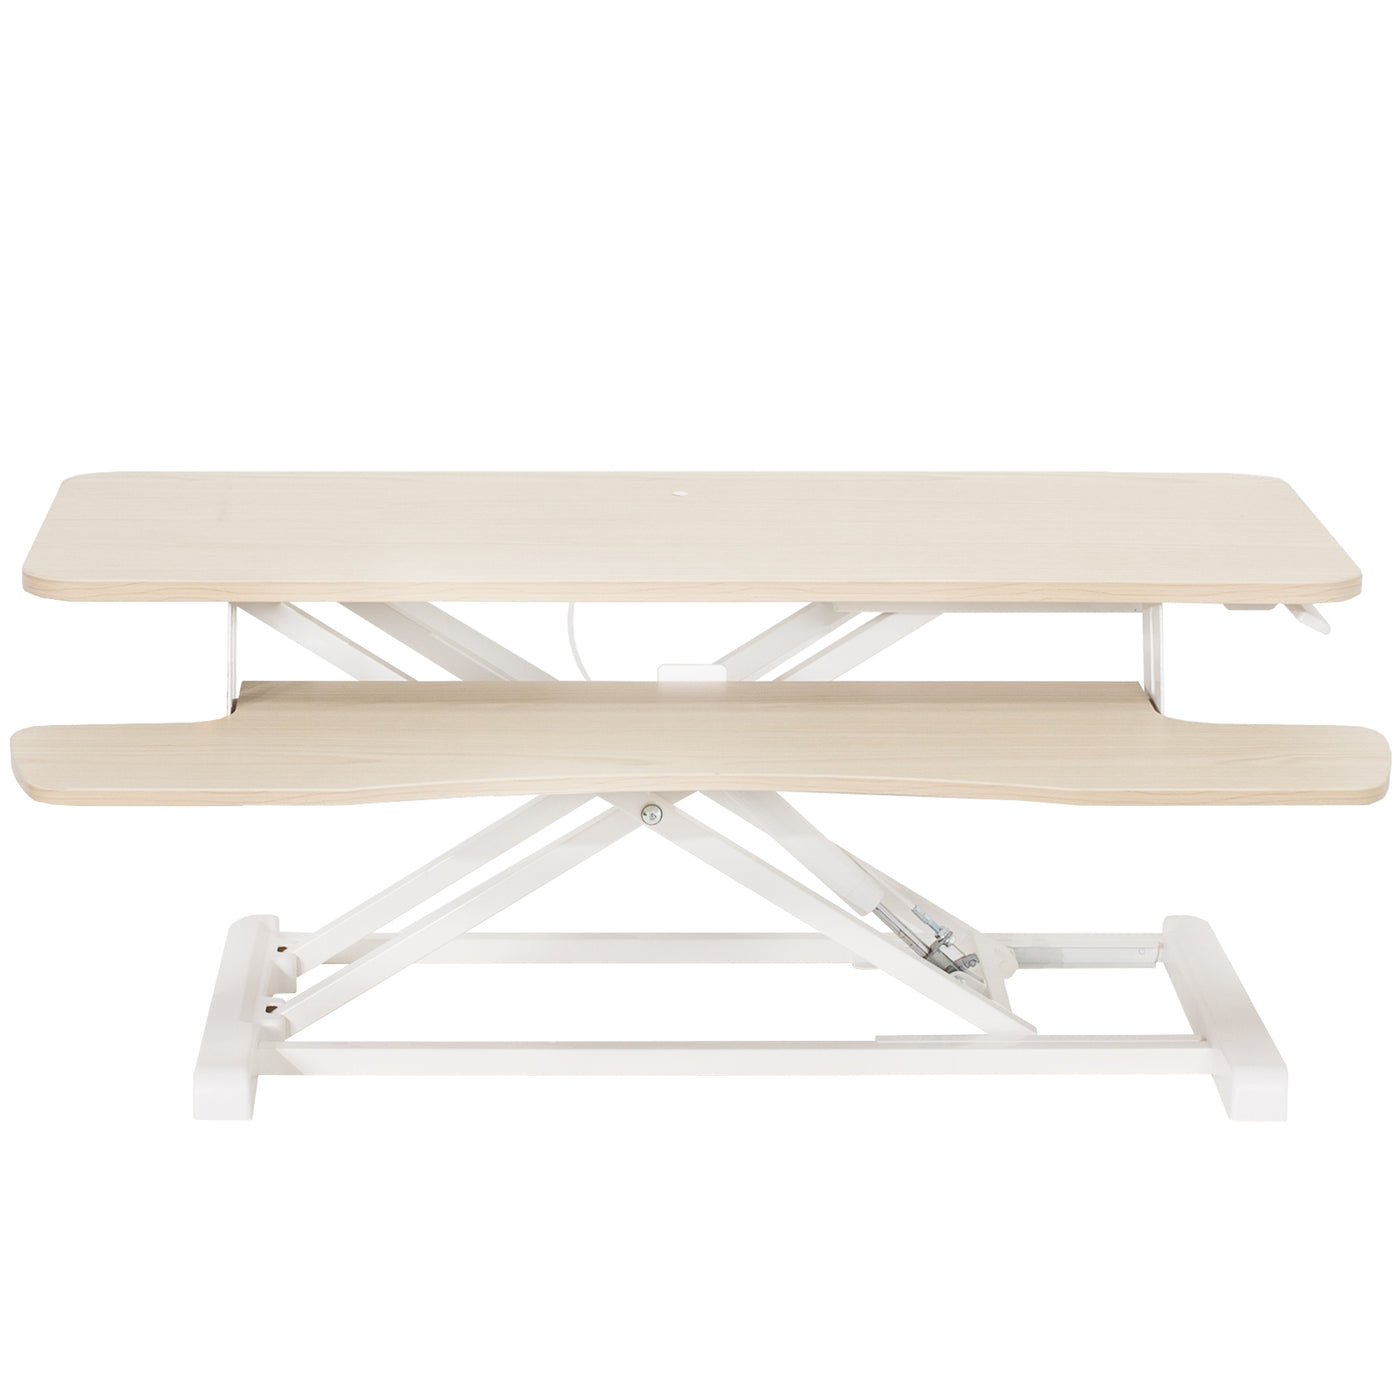 Sturdy height adjustable 2-tiered desk riser for ergonomic office workstation.